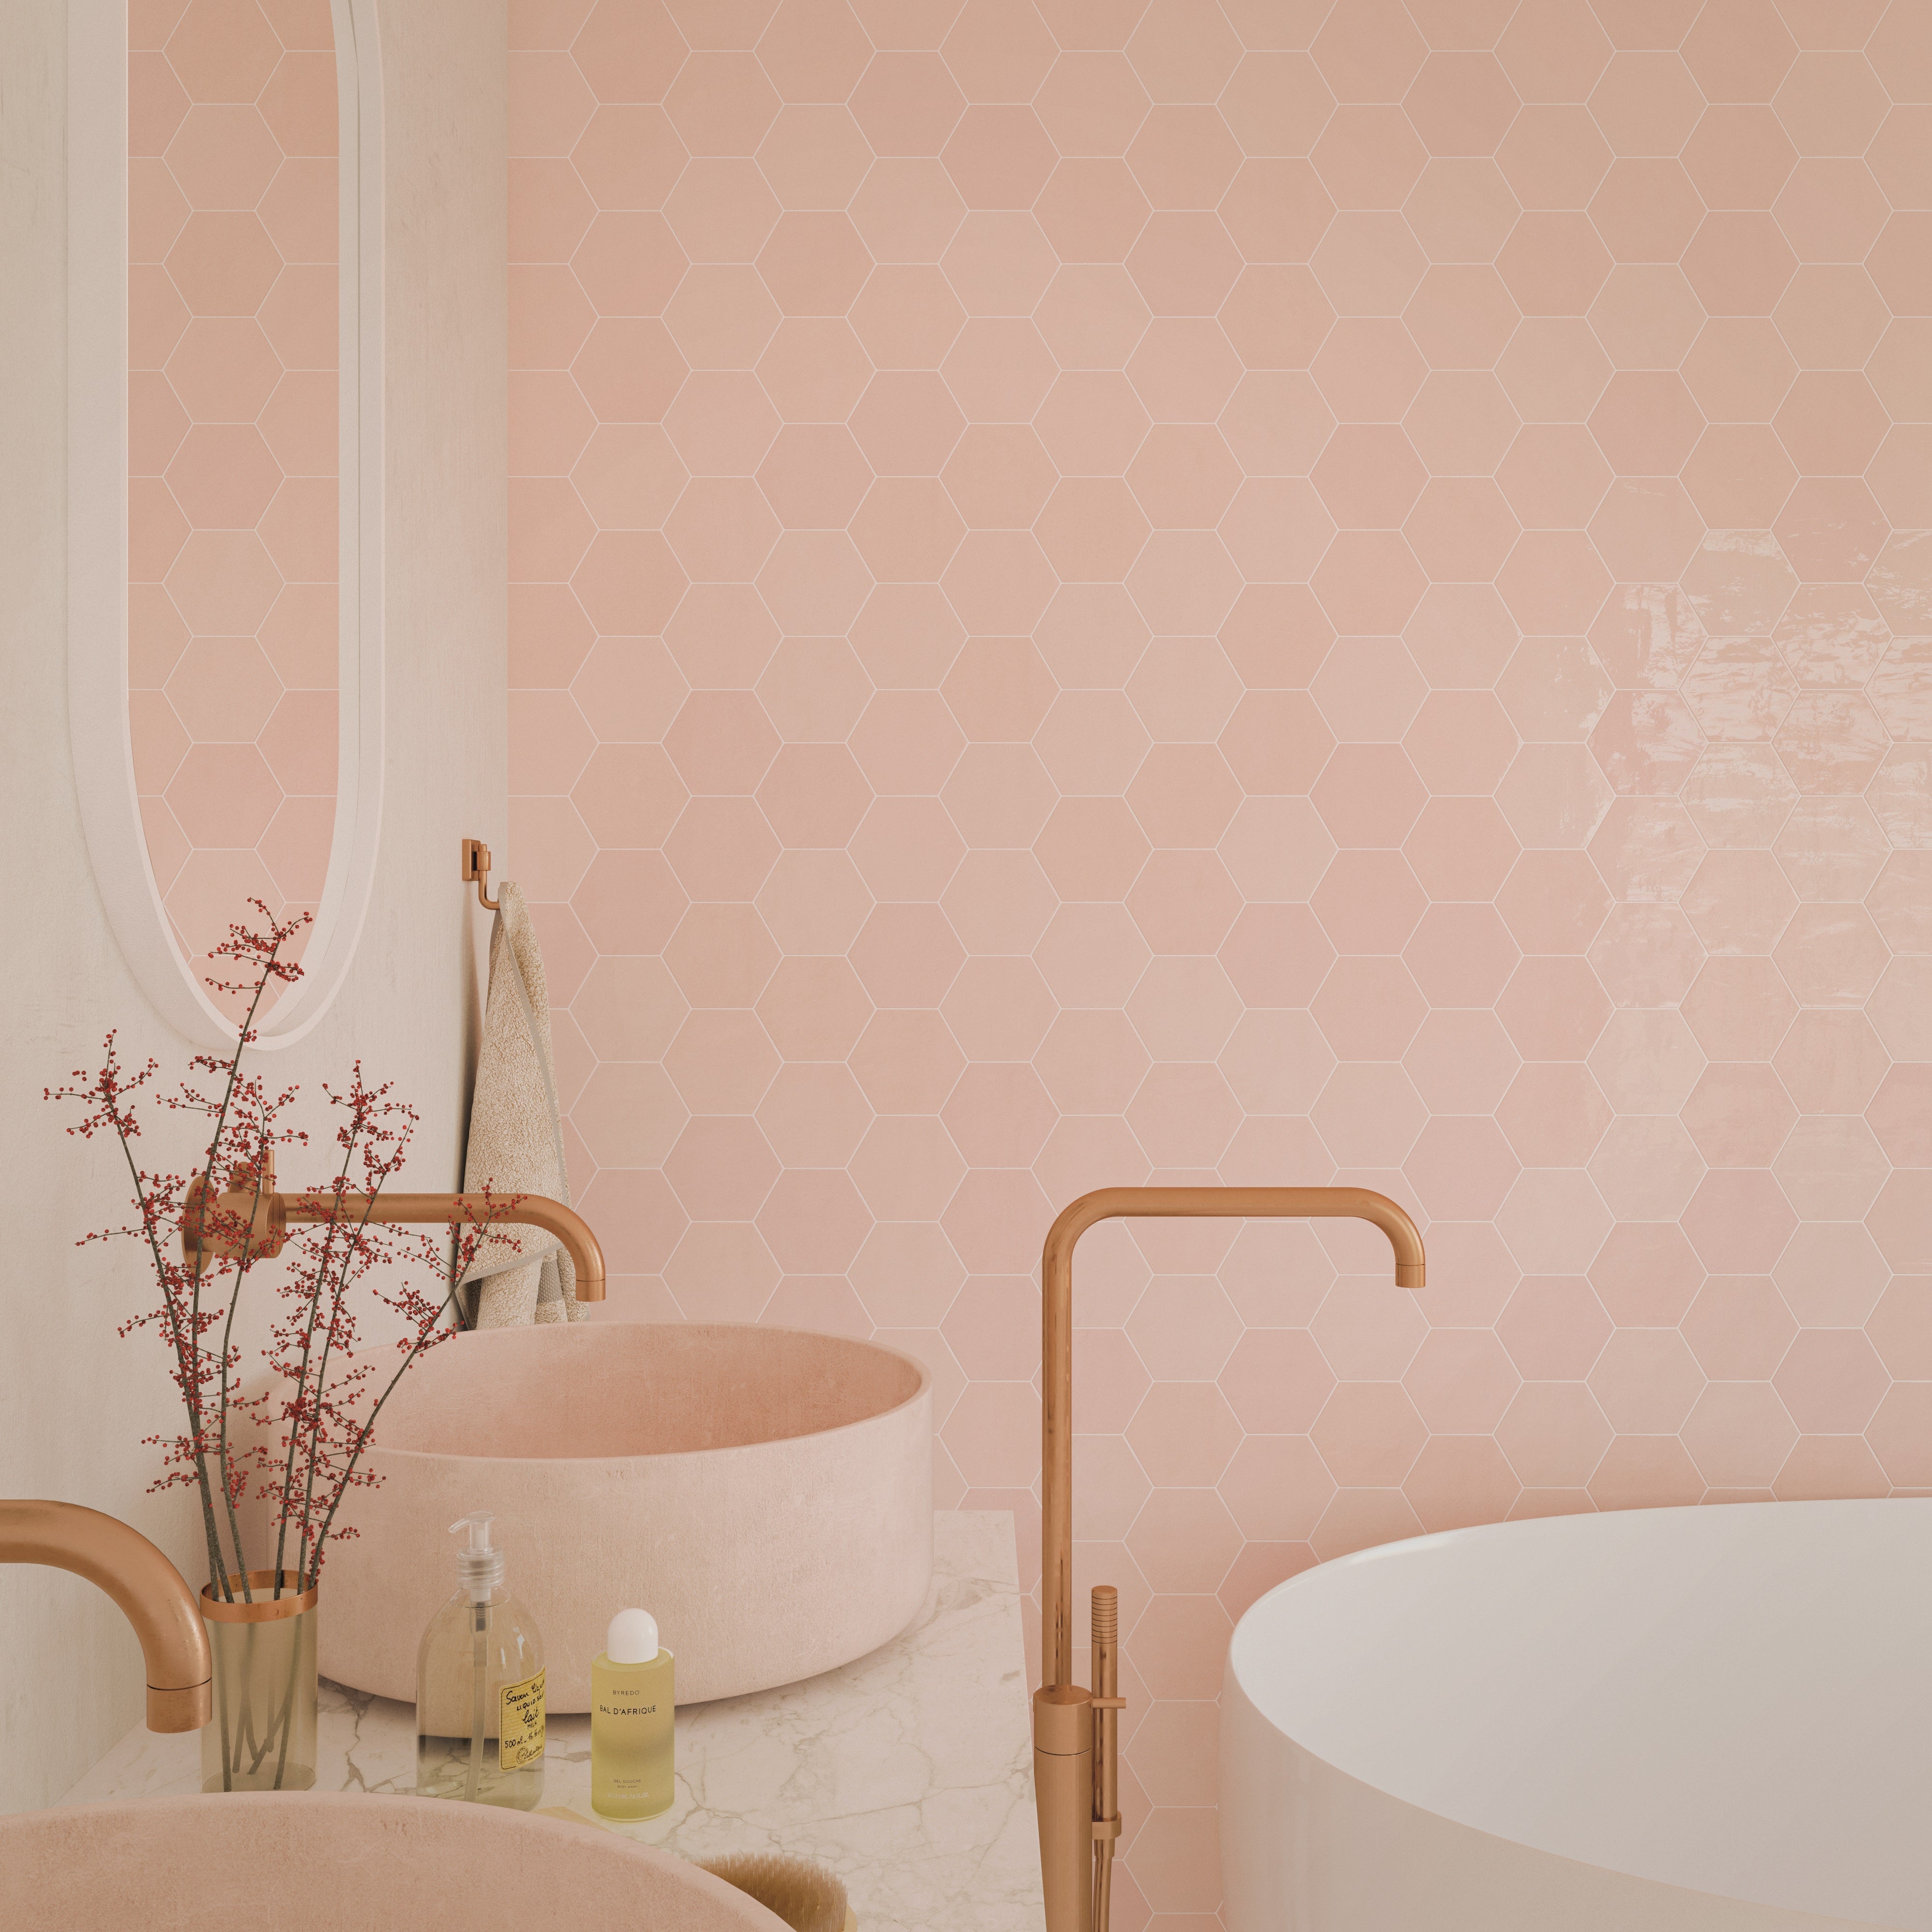 LOT 30,78 m² - Hexagoon Pink 10.8 x 12.4 x 1 cm